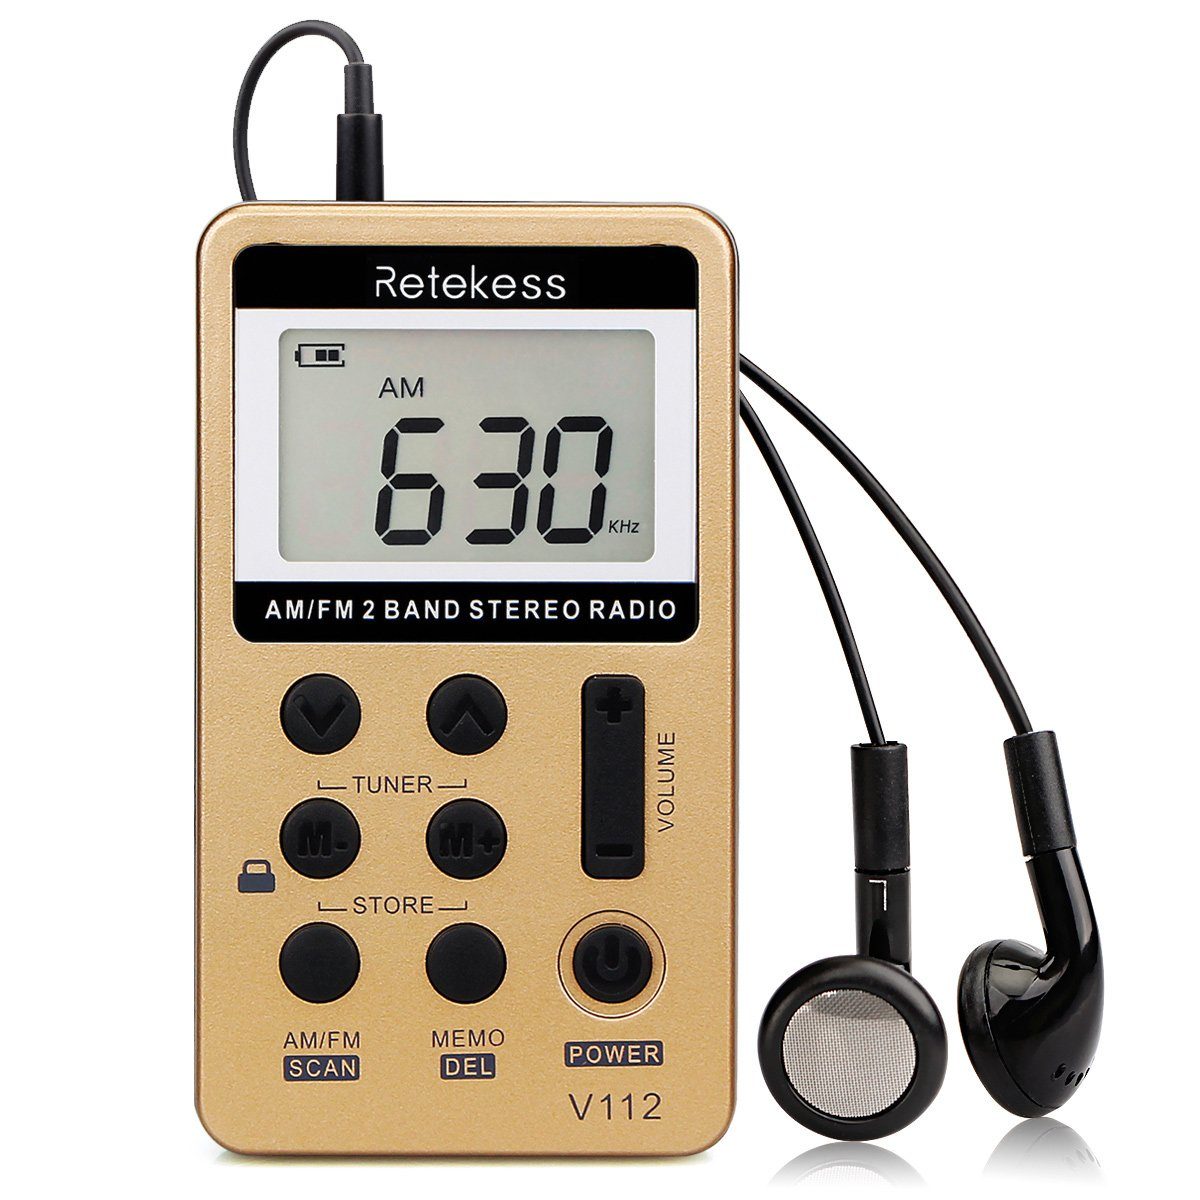 Retekess V112 AM FM Taschenradio mit Kopfhörer Sleeptimer mit Kopfhörer Digitalradio (DAB) (FM / AM 2 Band Stereo Radio, Sperrtaste, Sleeptimer, 500mAh Akku)